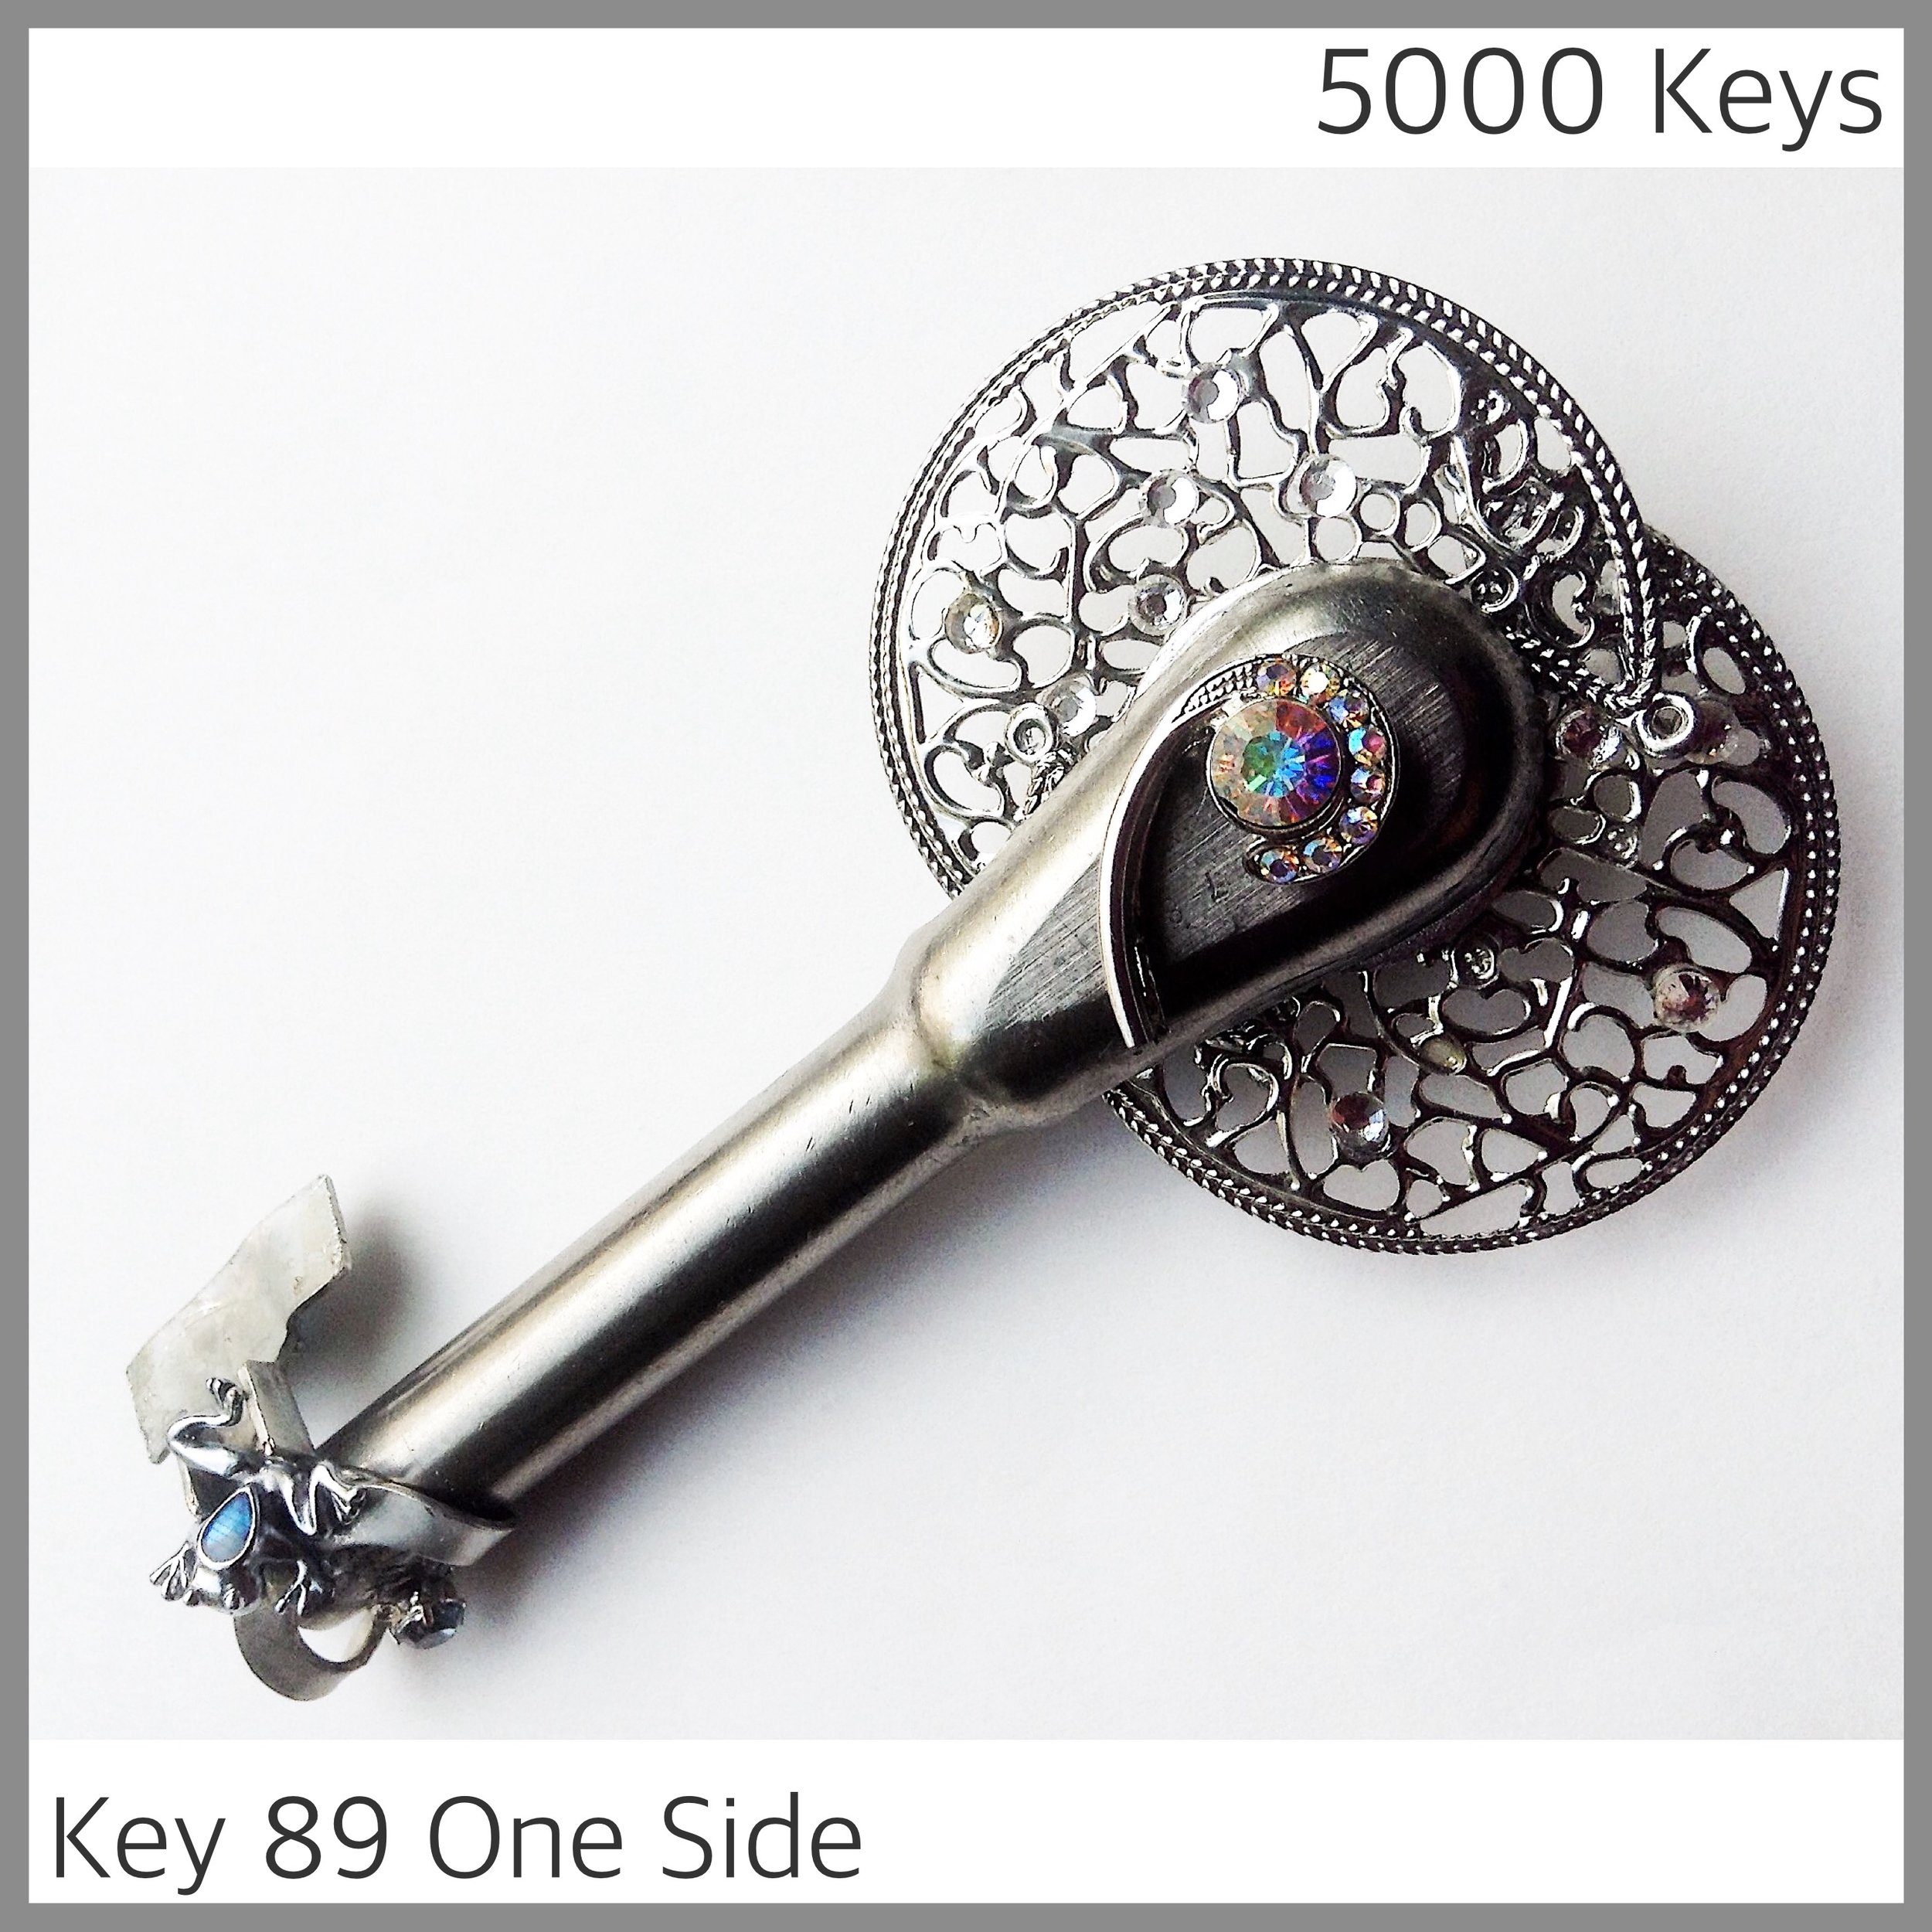 Key 89 one side.JPG